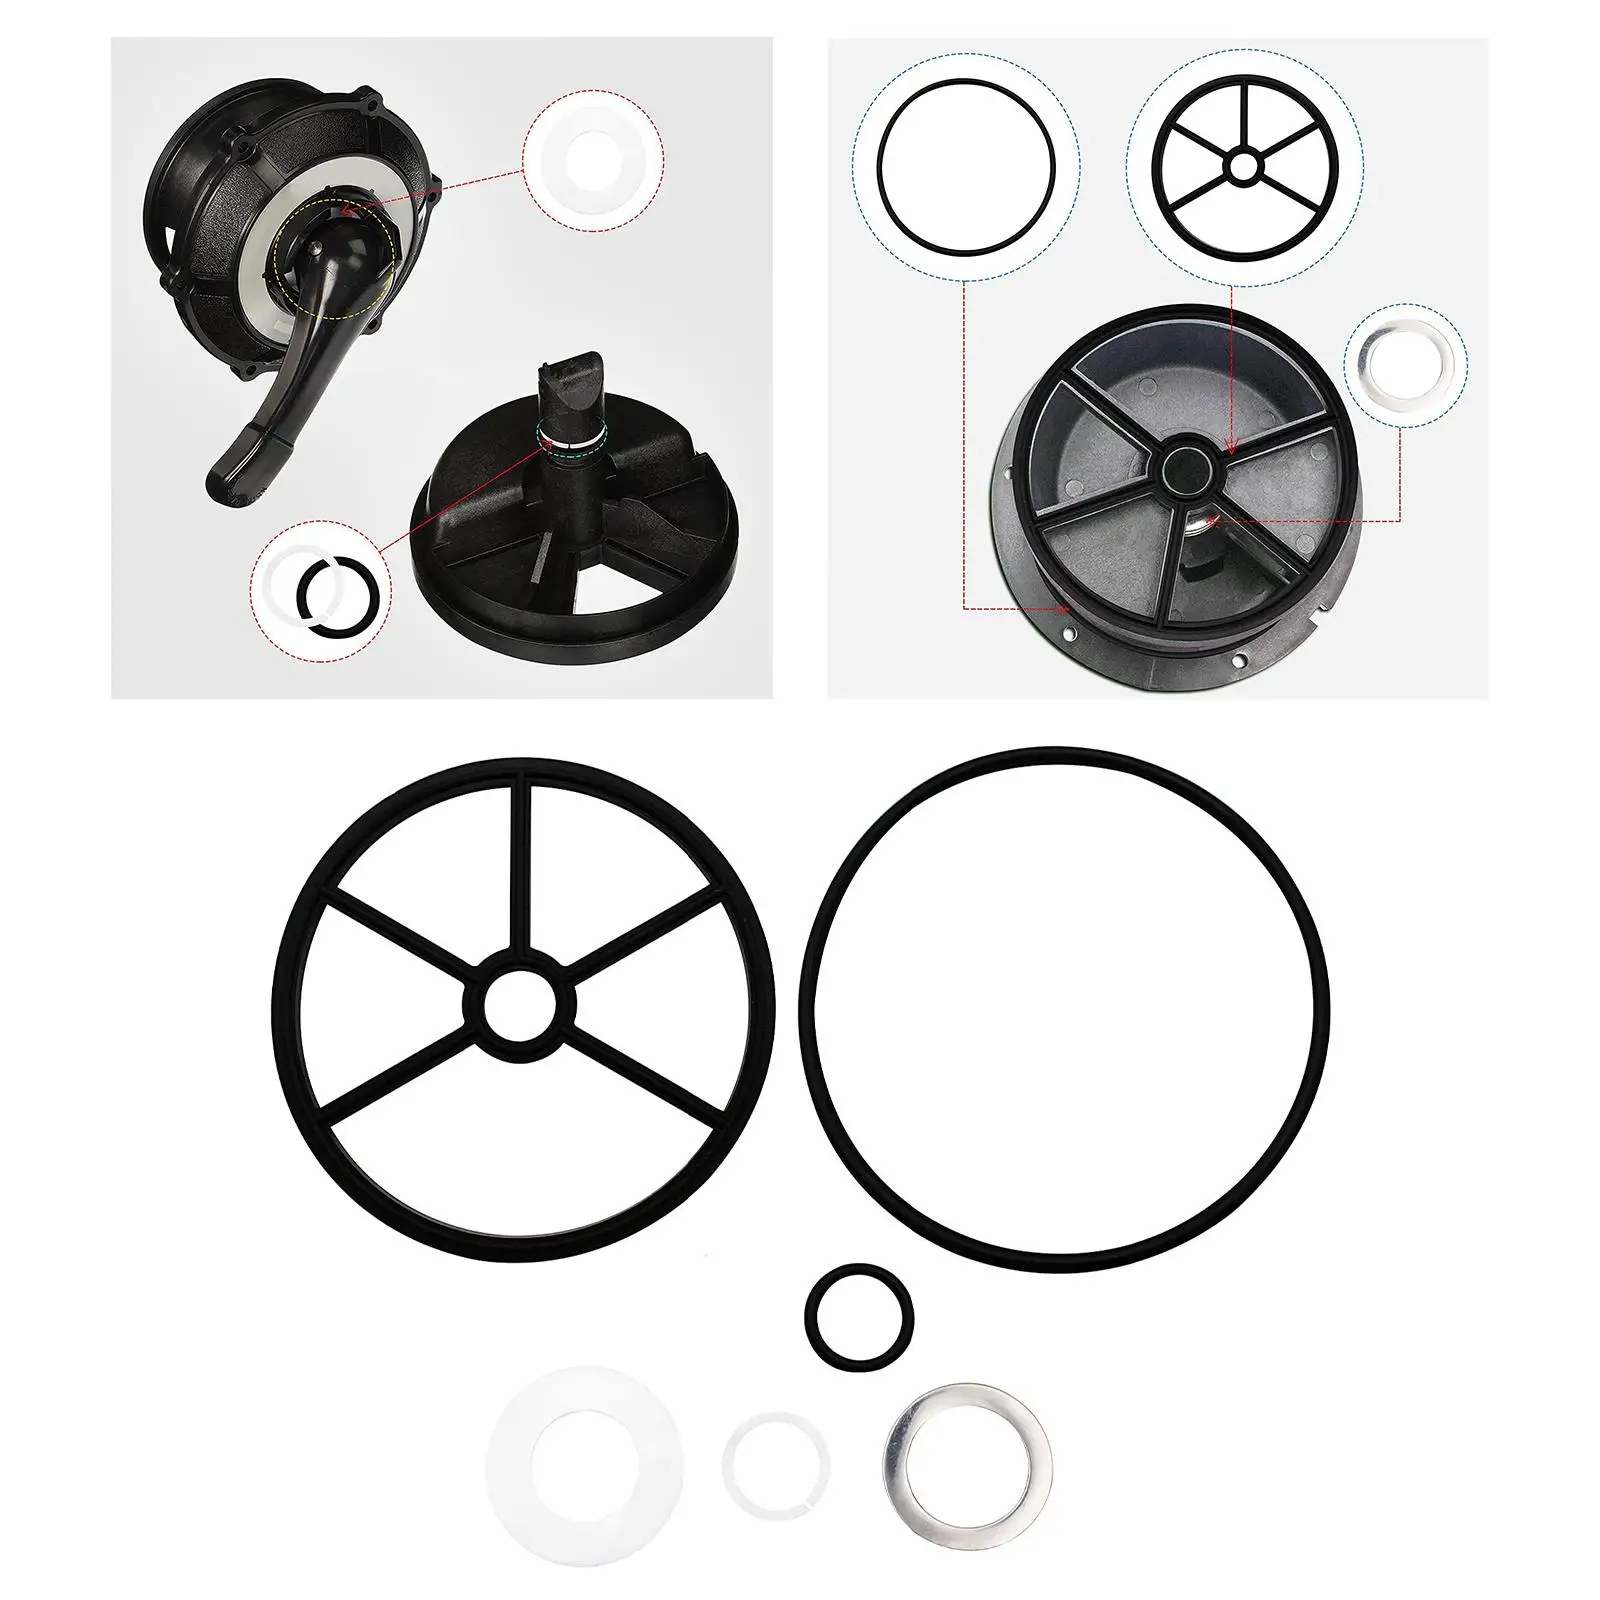 6Pcs Diverter Seal Ring Accessories for Pools and SPA Diverter Spider Gasket